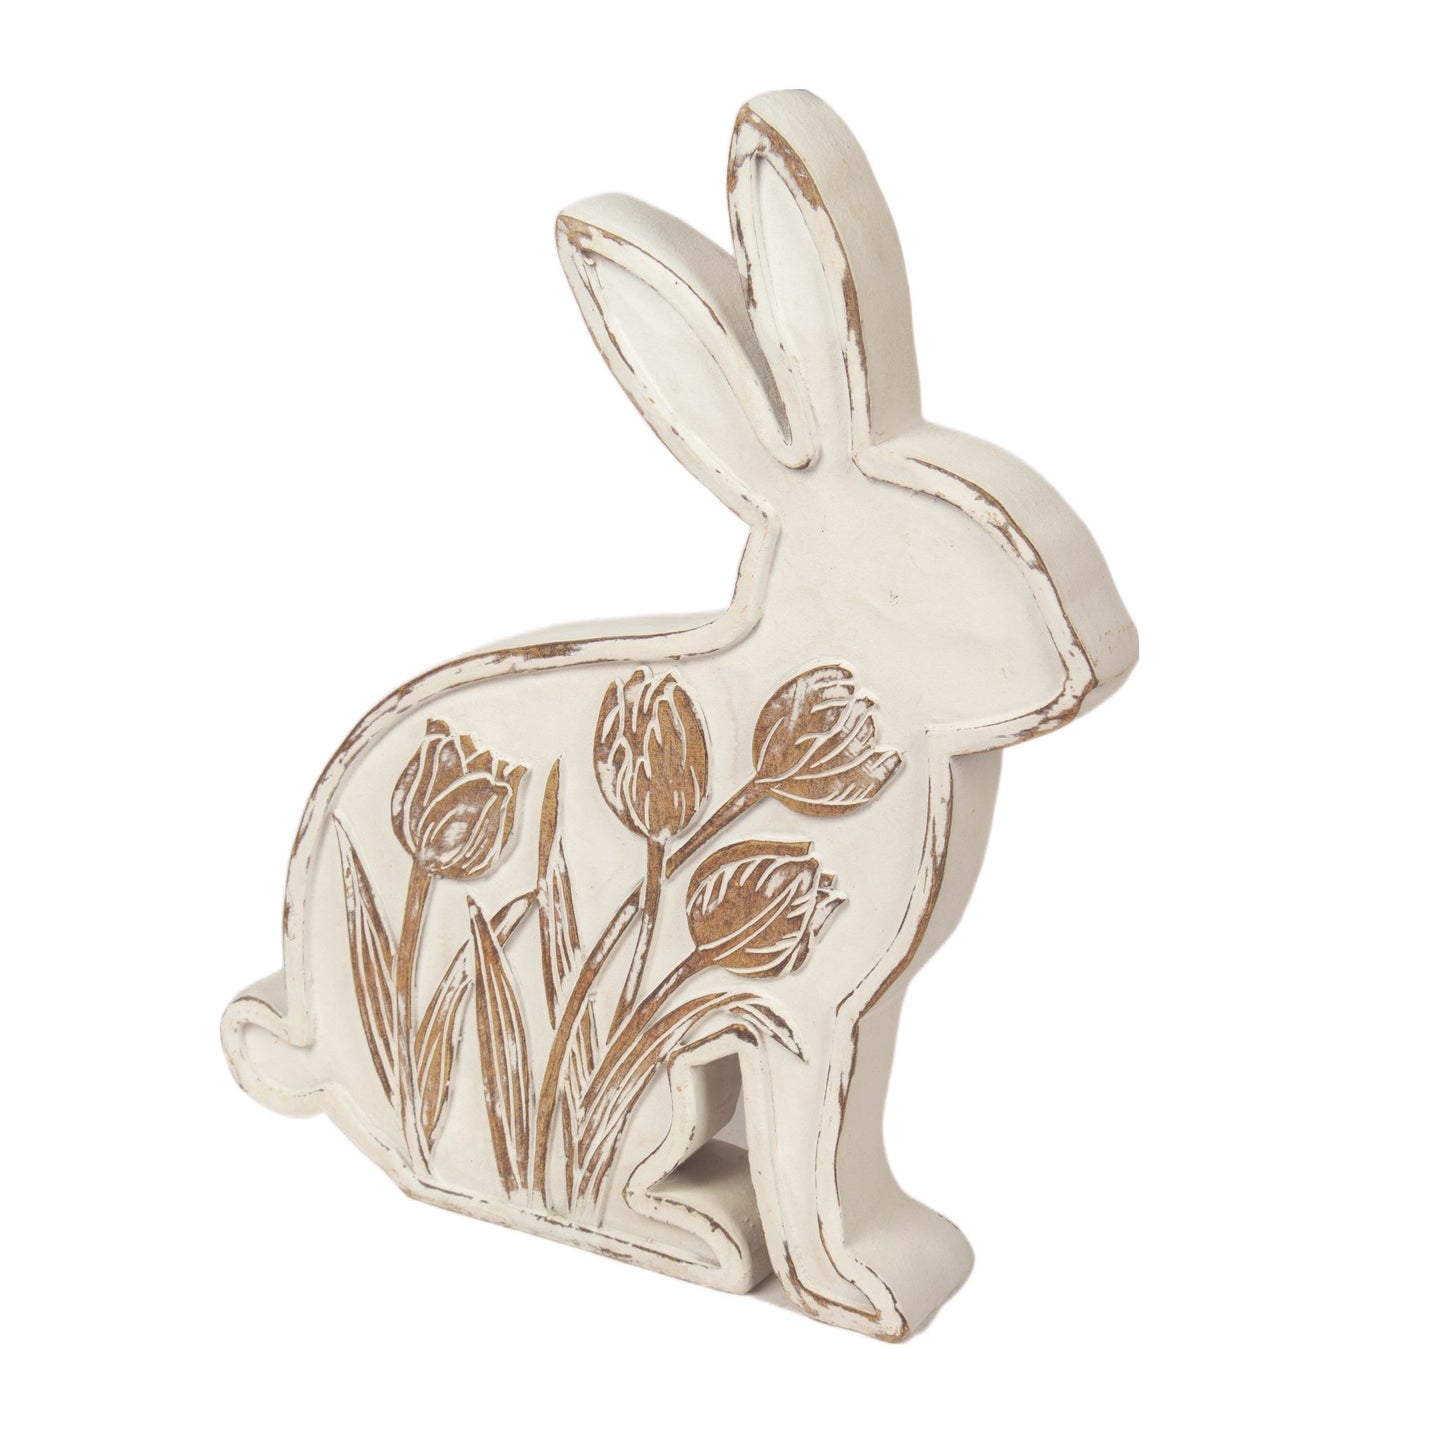 White Rabbit Figurine with Tulips - 2 sizes